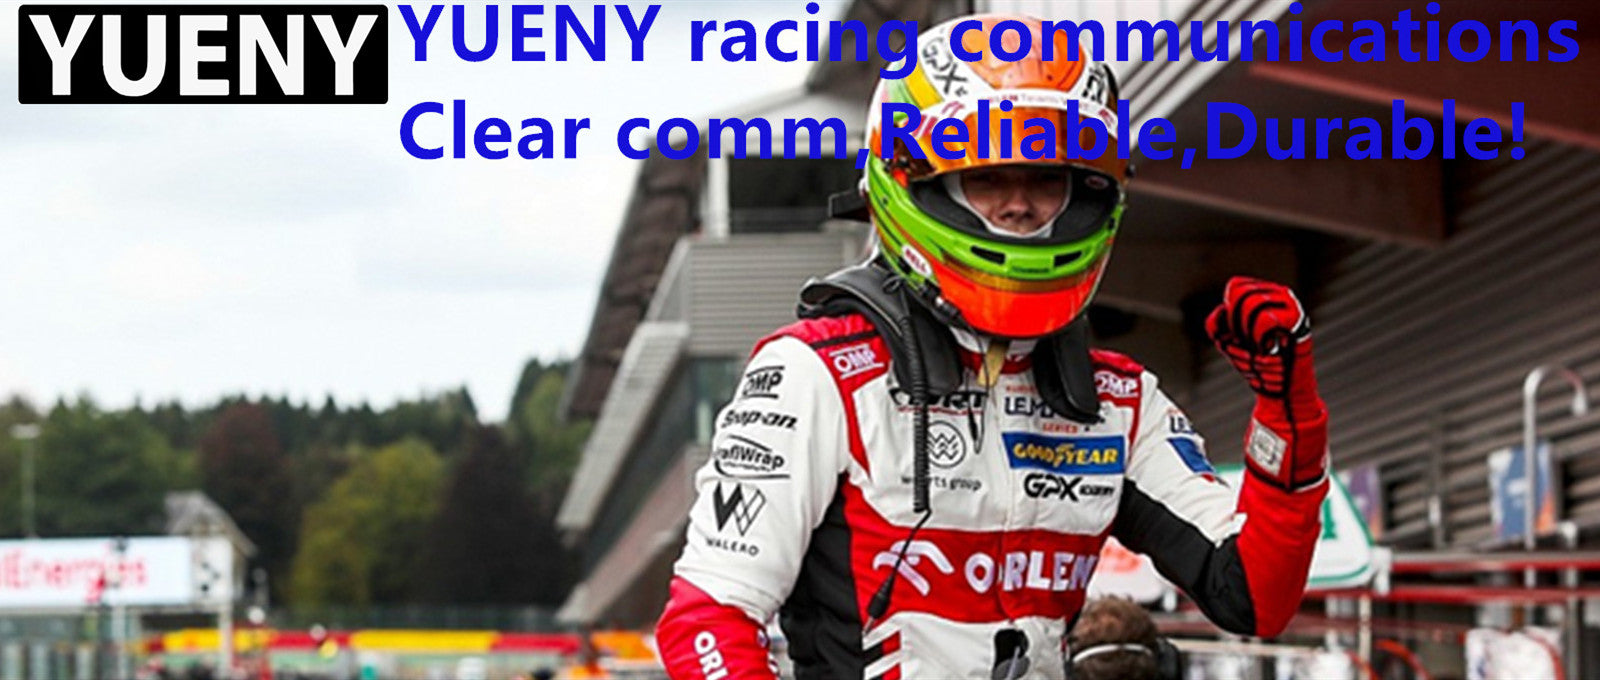 yueny_racing_radio_communications